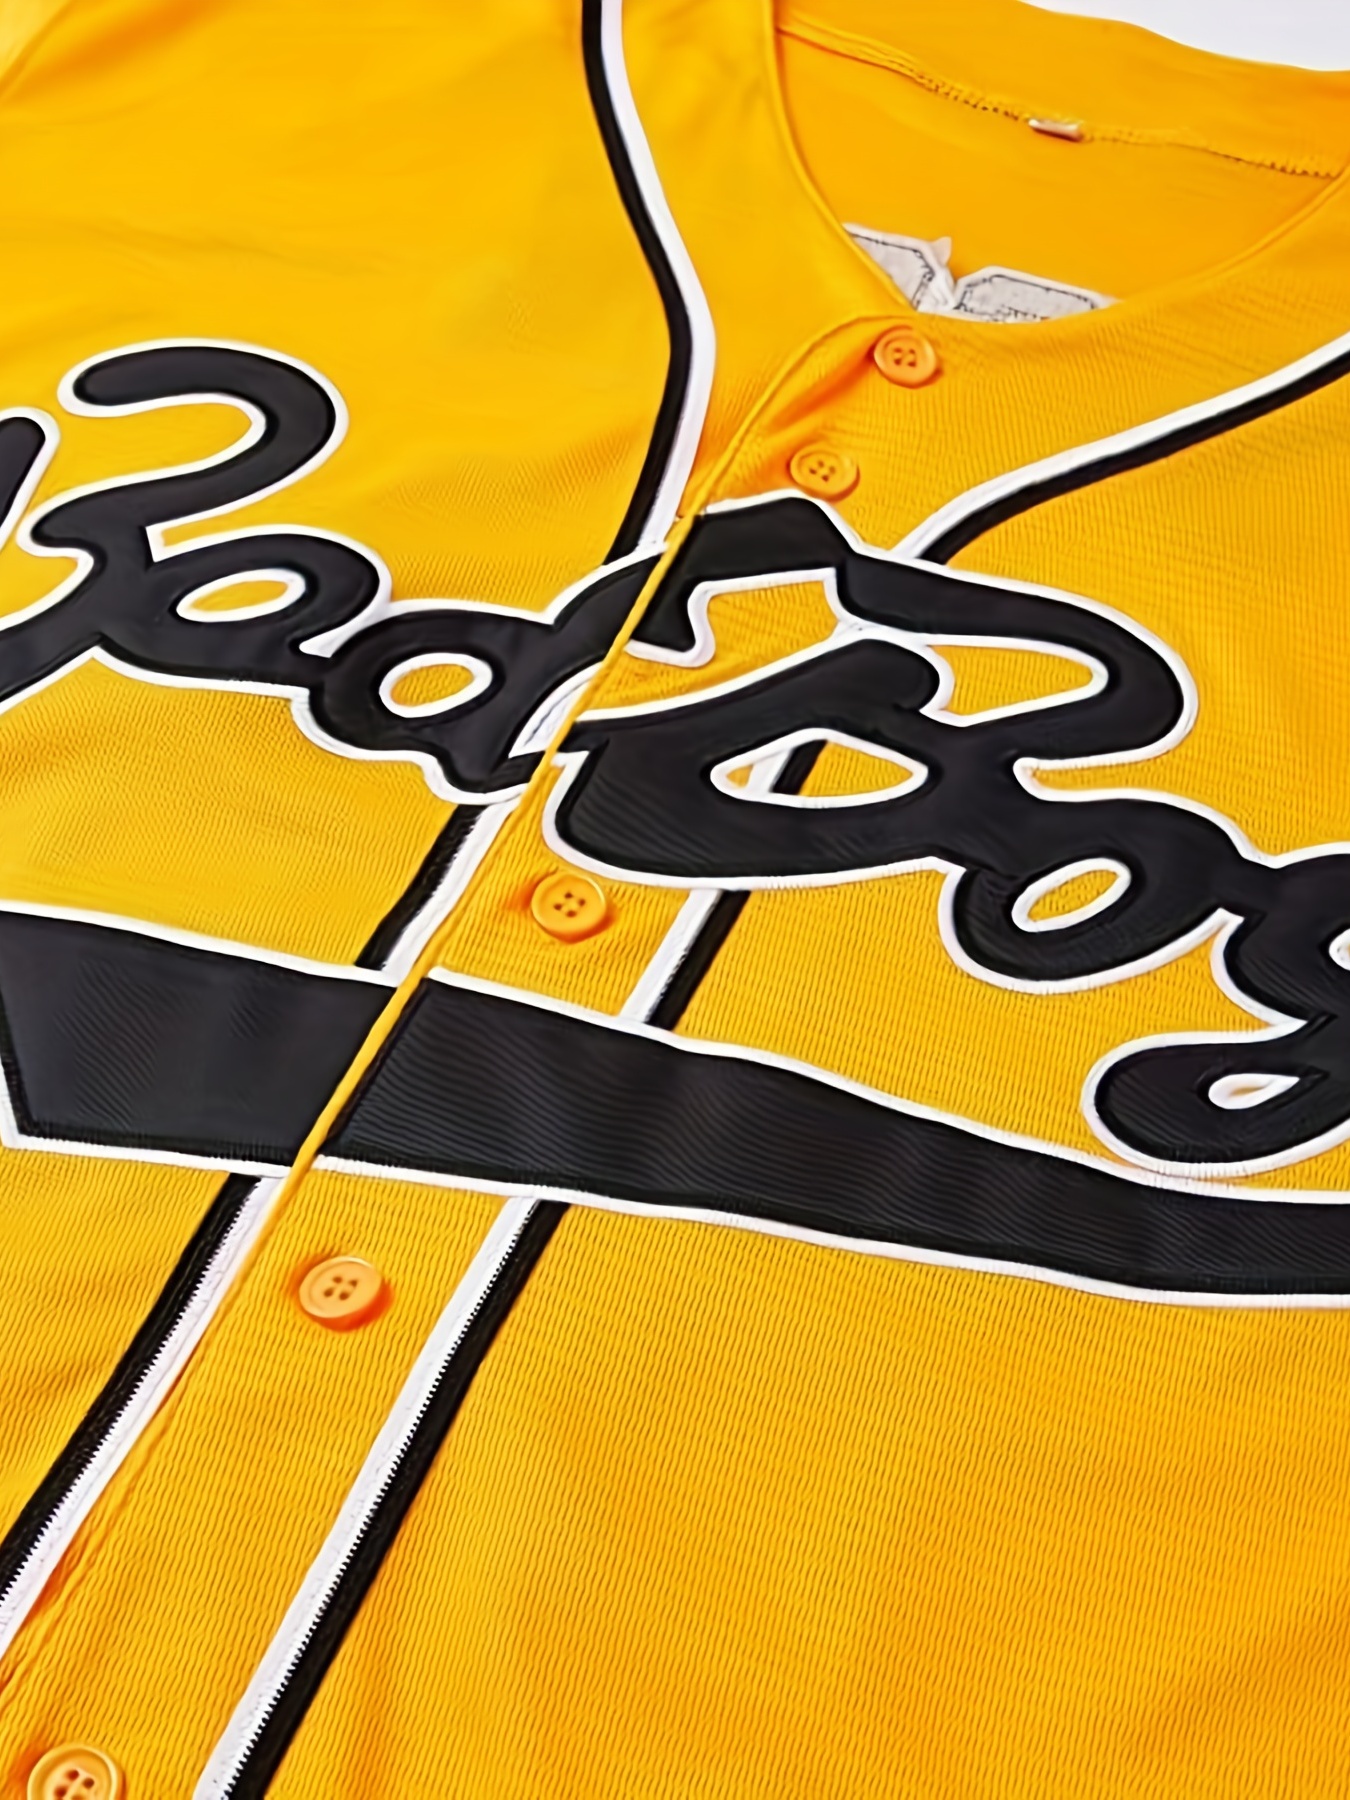 Men's Retro Badboy #10 Biggie Baseball Jersey Yellow Black Red